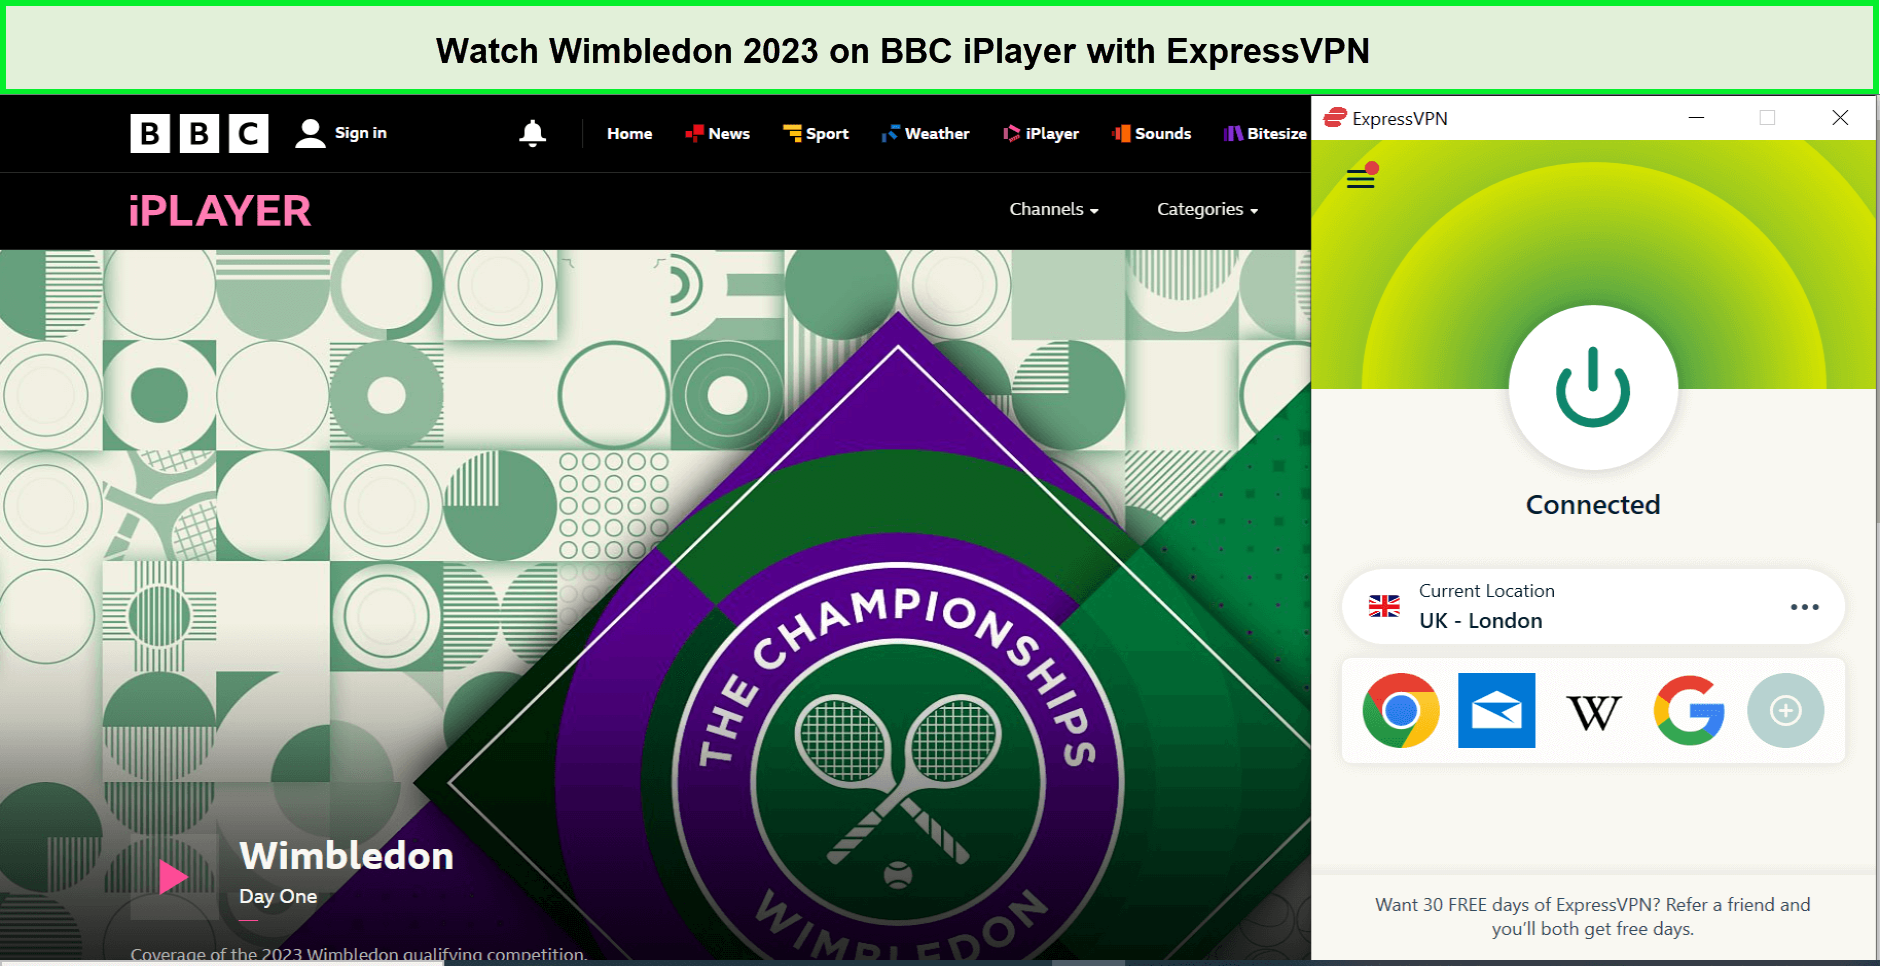 Watch-wimbledon-2023-with-expressvpn-on-bbc-iplayer- 